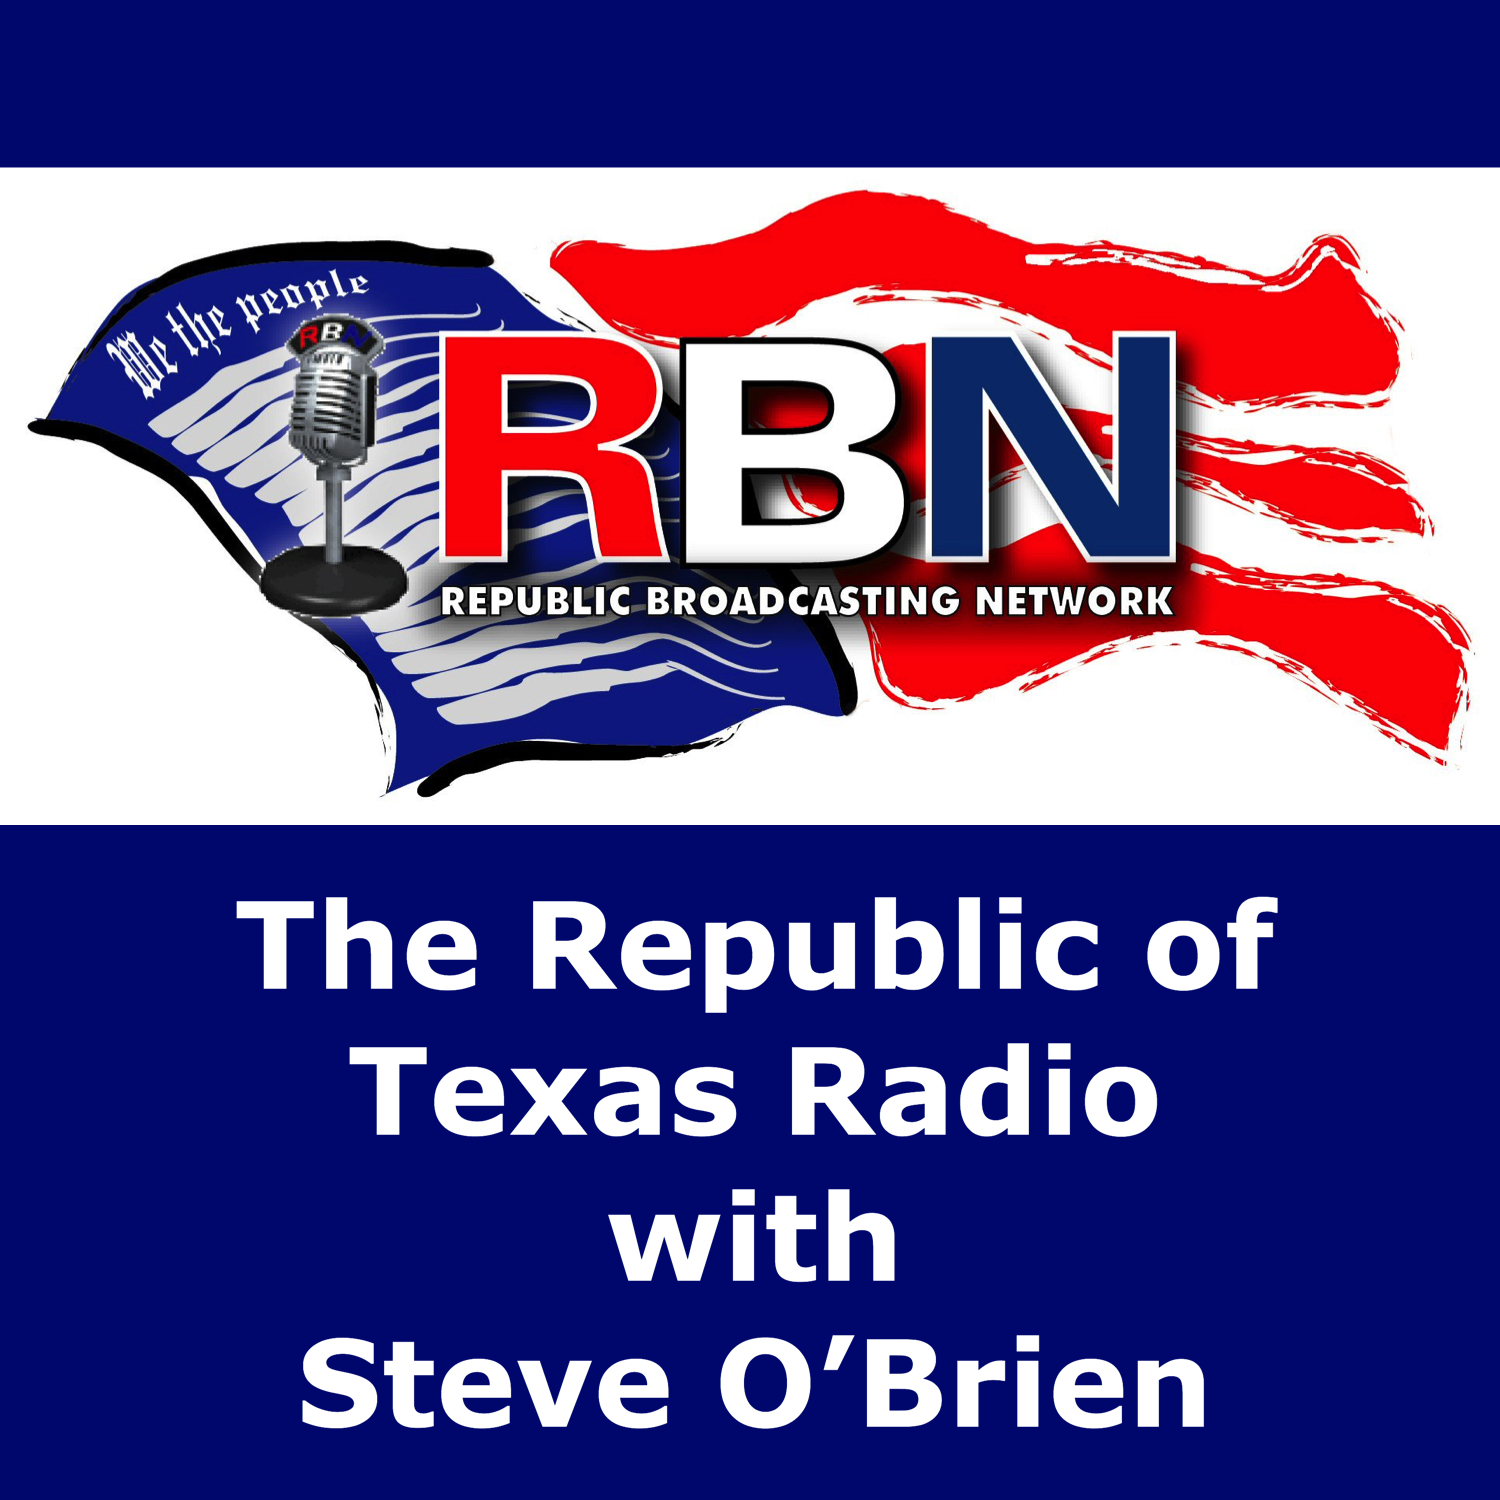 The Republic of Texas Radio